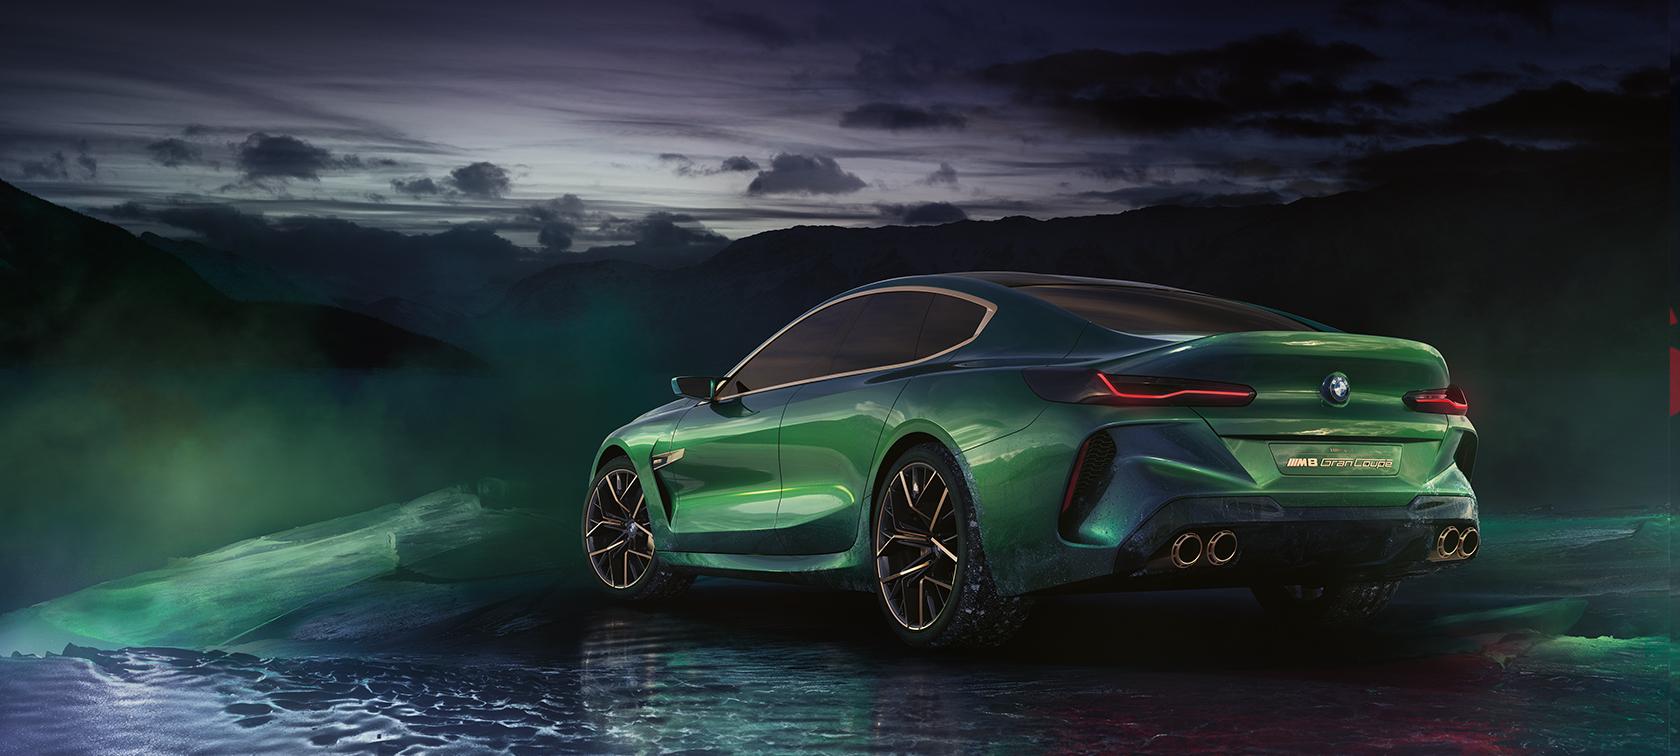 BMW Concept M8 Gran Coupé: High Performance Luxury